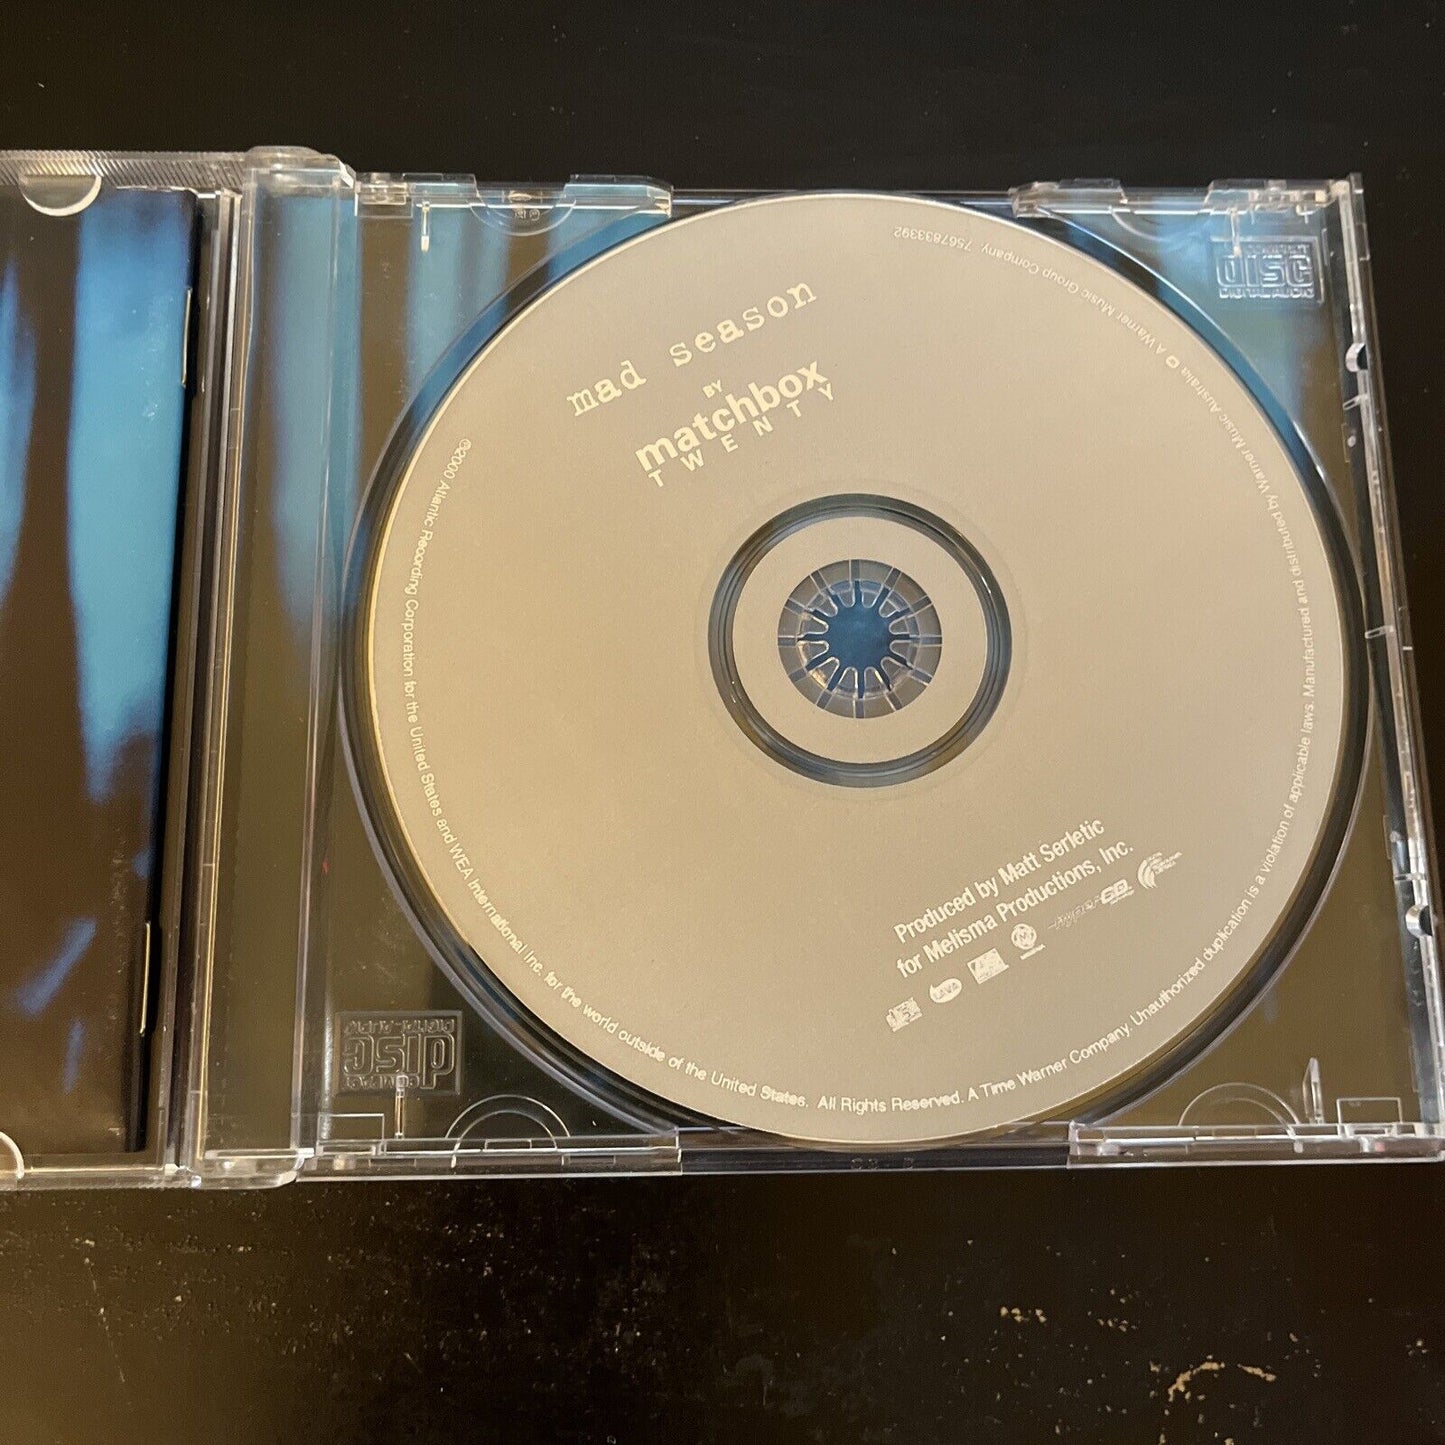 Matchbox Twenty - Mad Season (CD, 2000) Enhanced CD